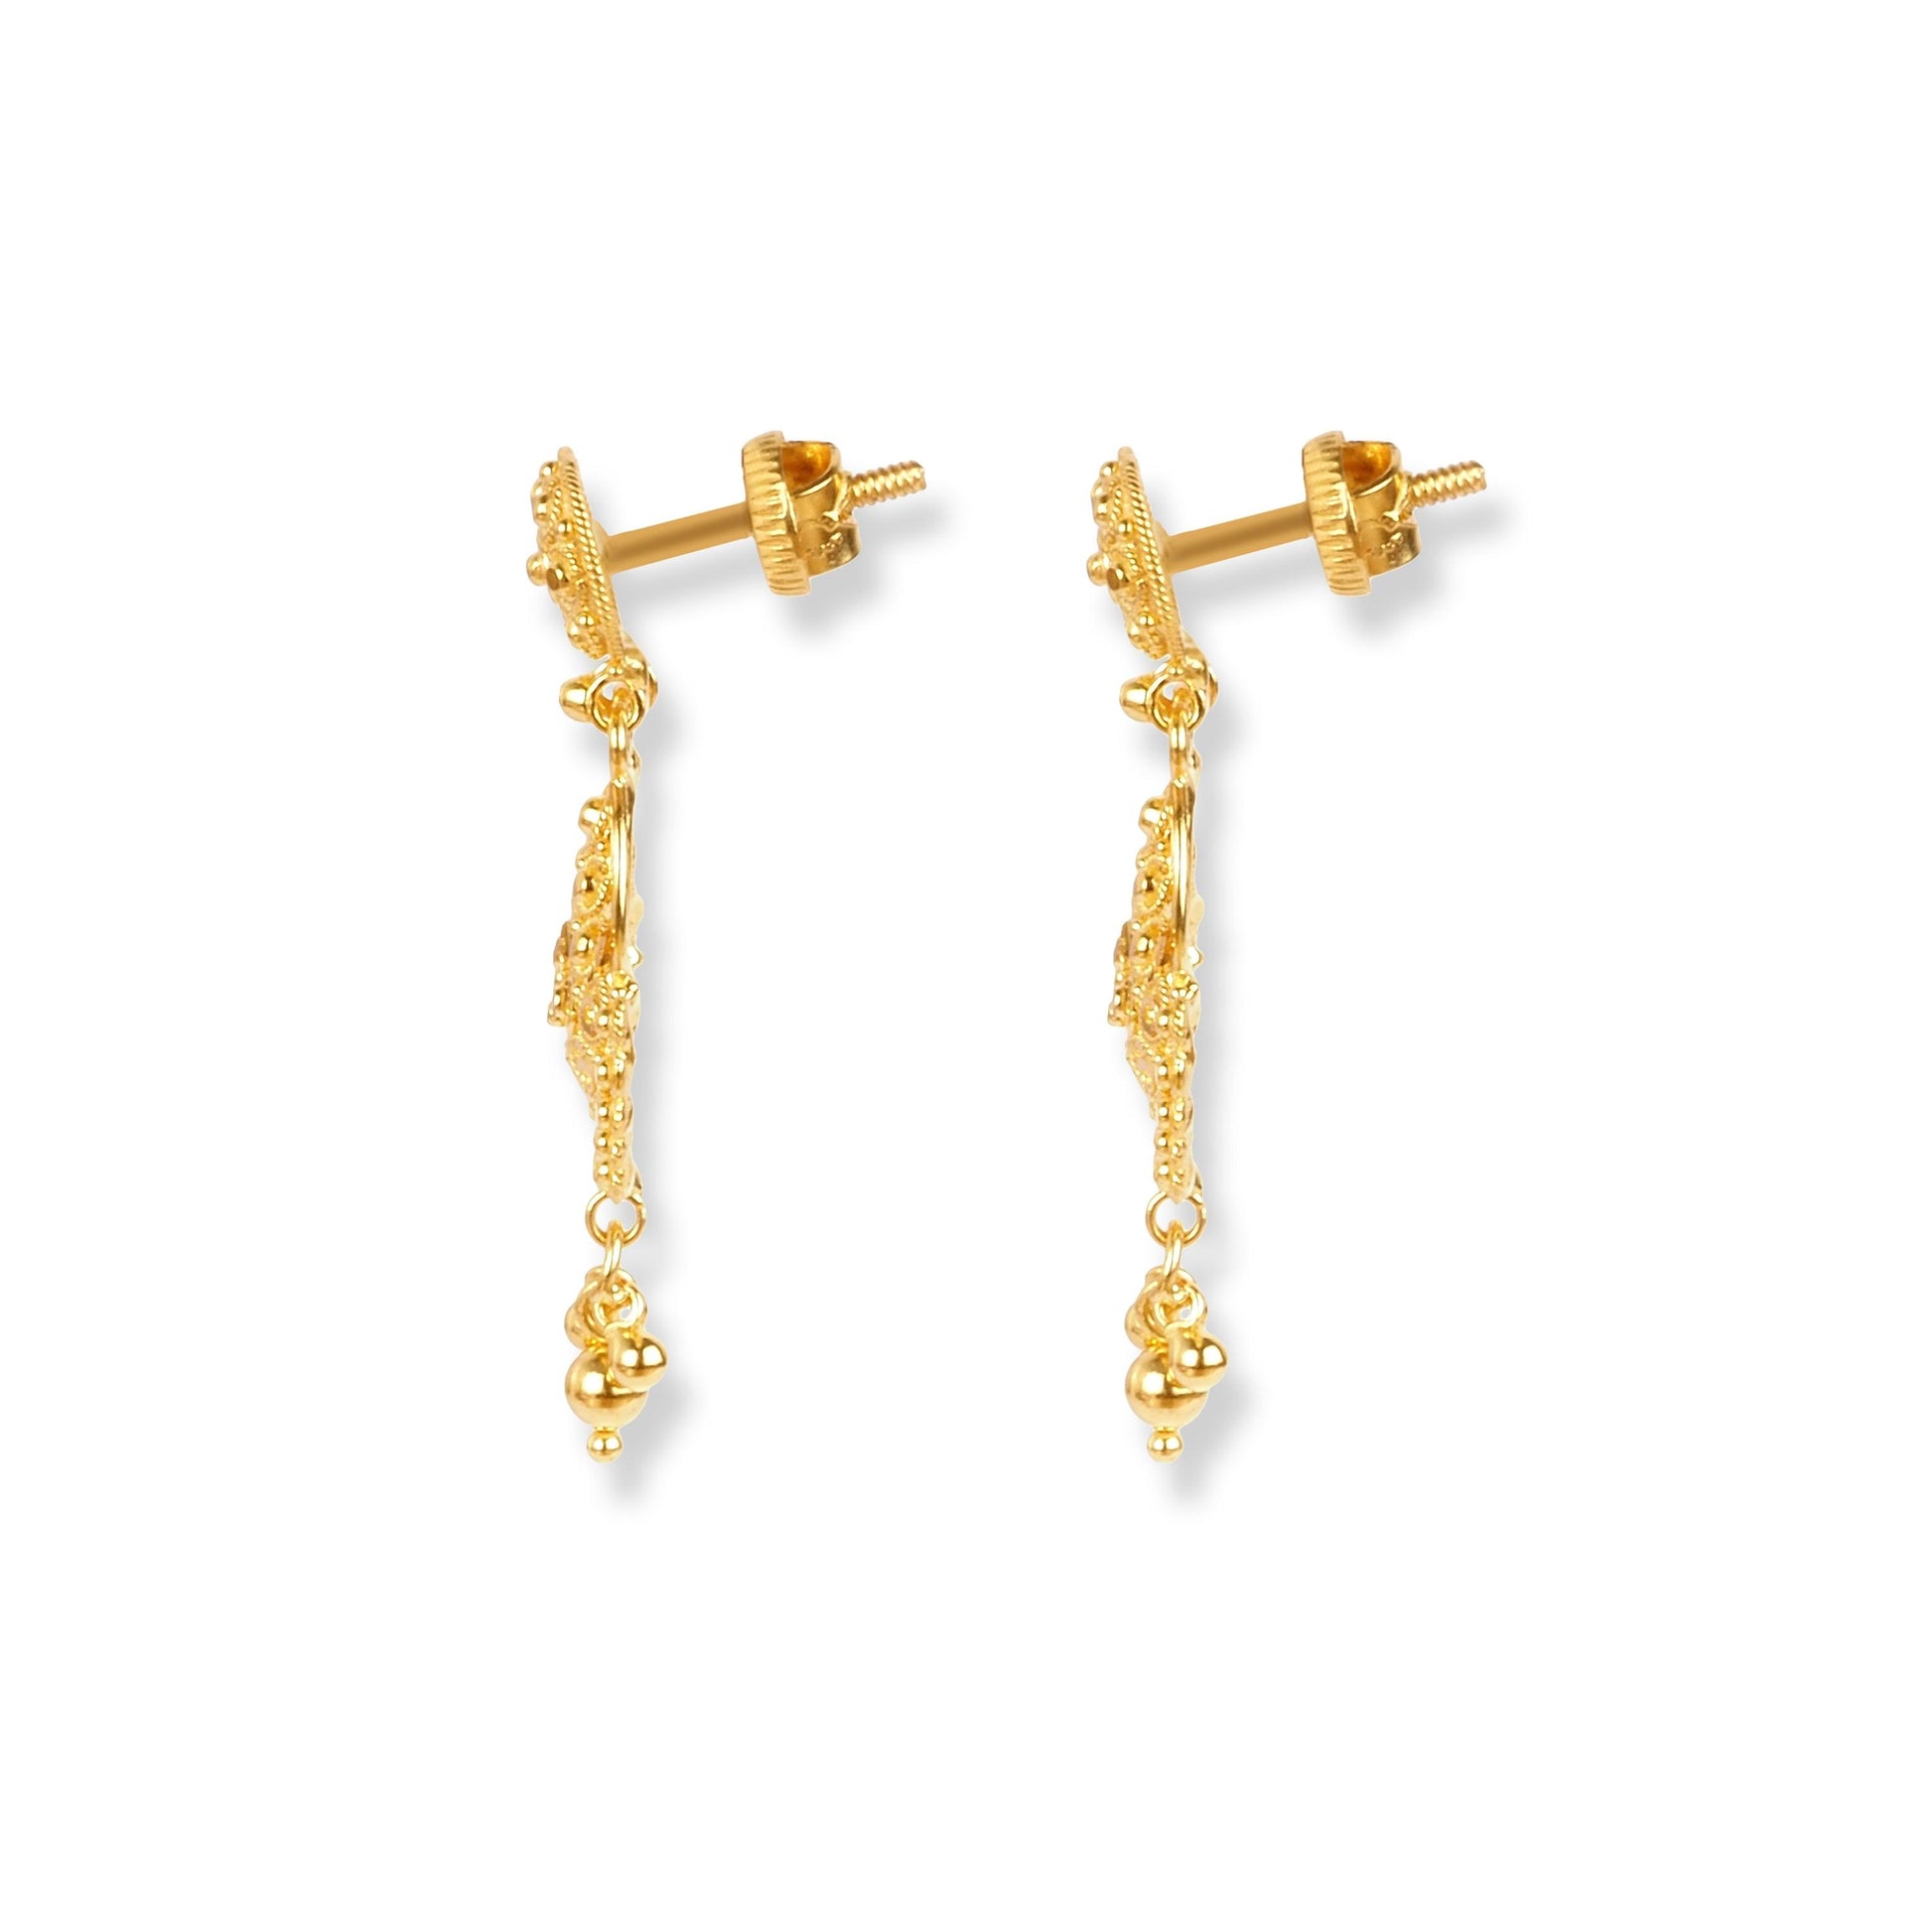 22ct Gold Set with Filigree Work N-7902 - Minar Jewellers